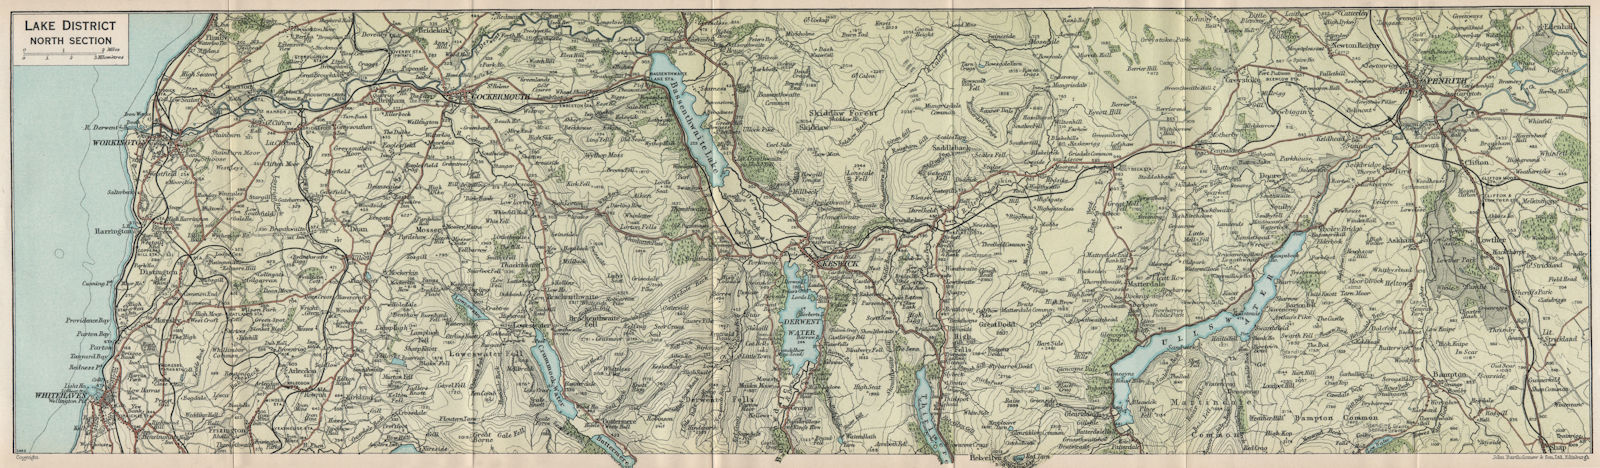 LAKE DISTRICT NORTH. Keswick Ullswater Derwent Water Bassenthwaite 1930 map